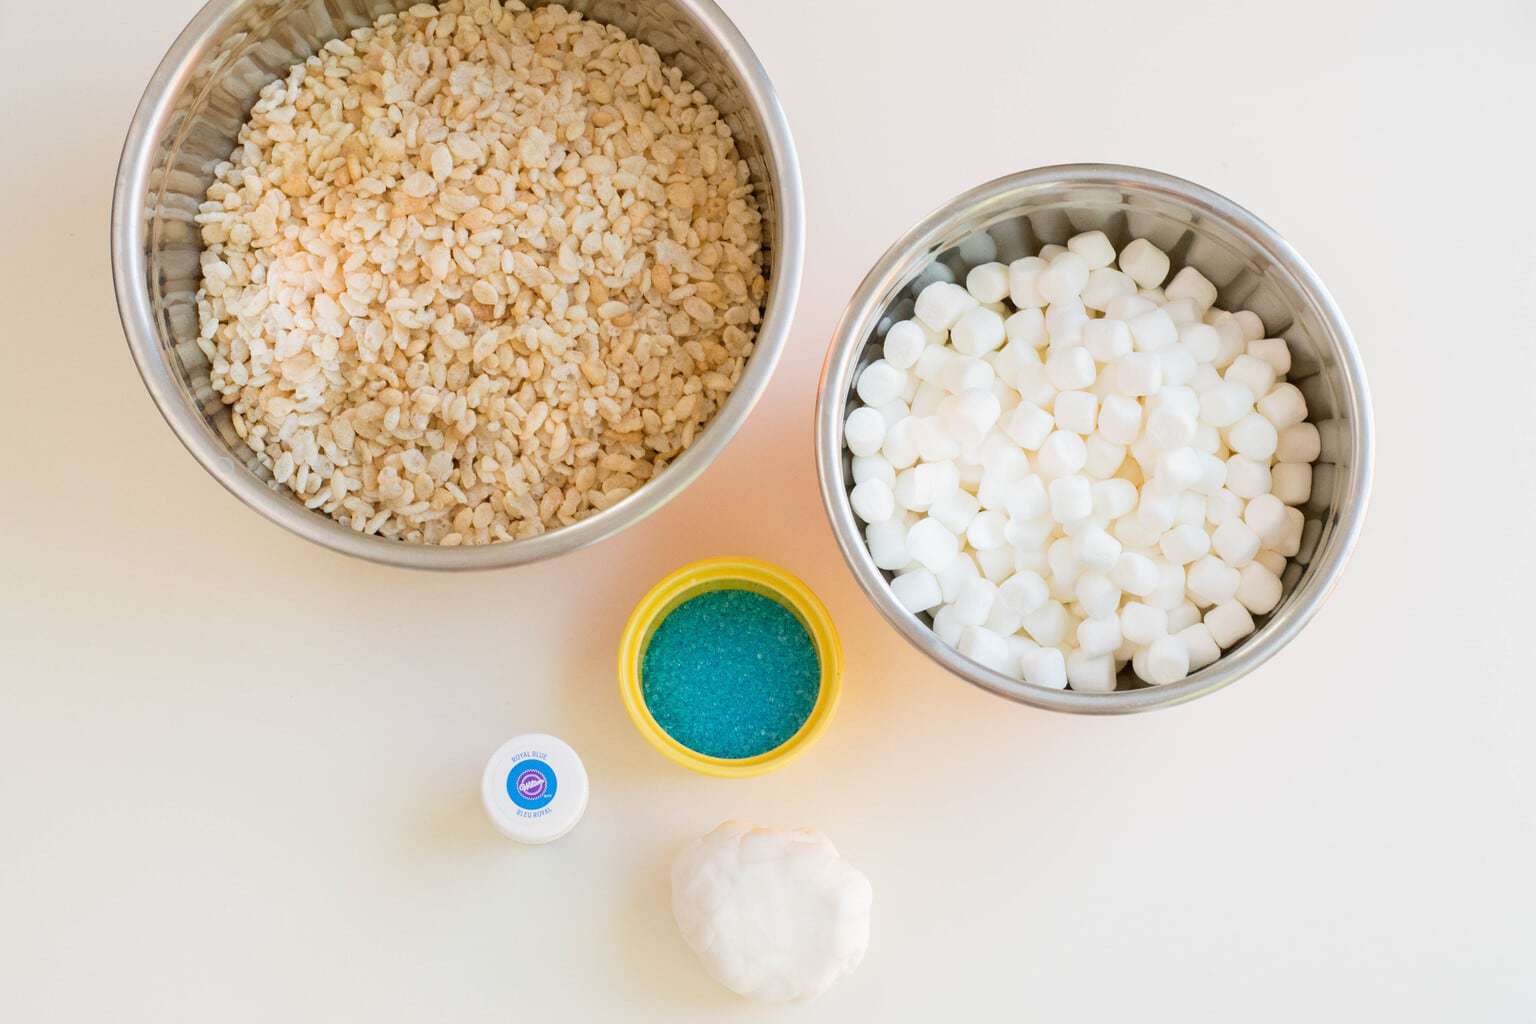 ingredients needed for Elsa Inspired Rice Krispie Treats